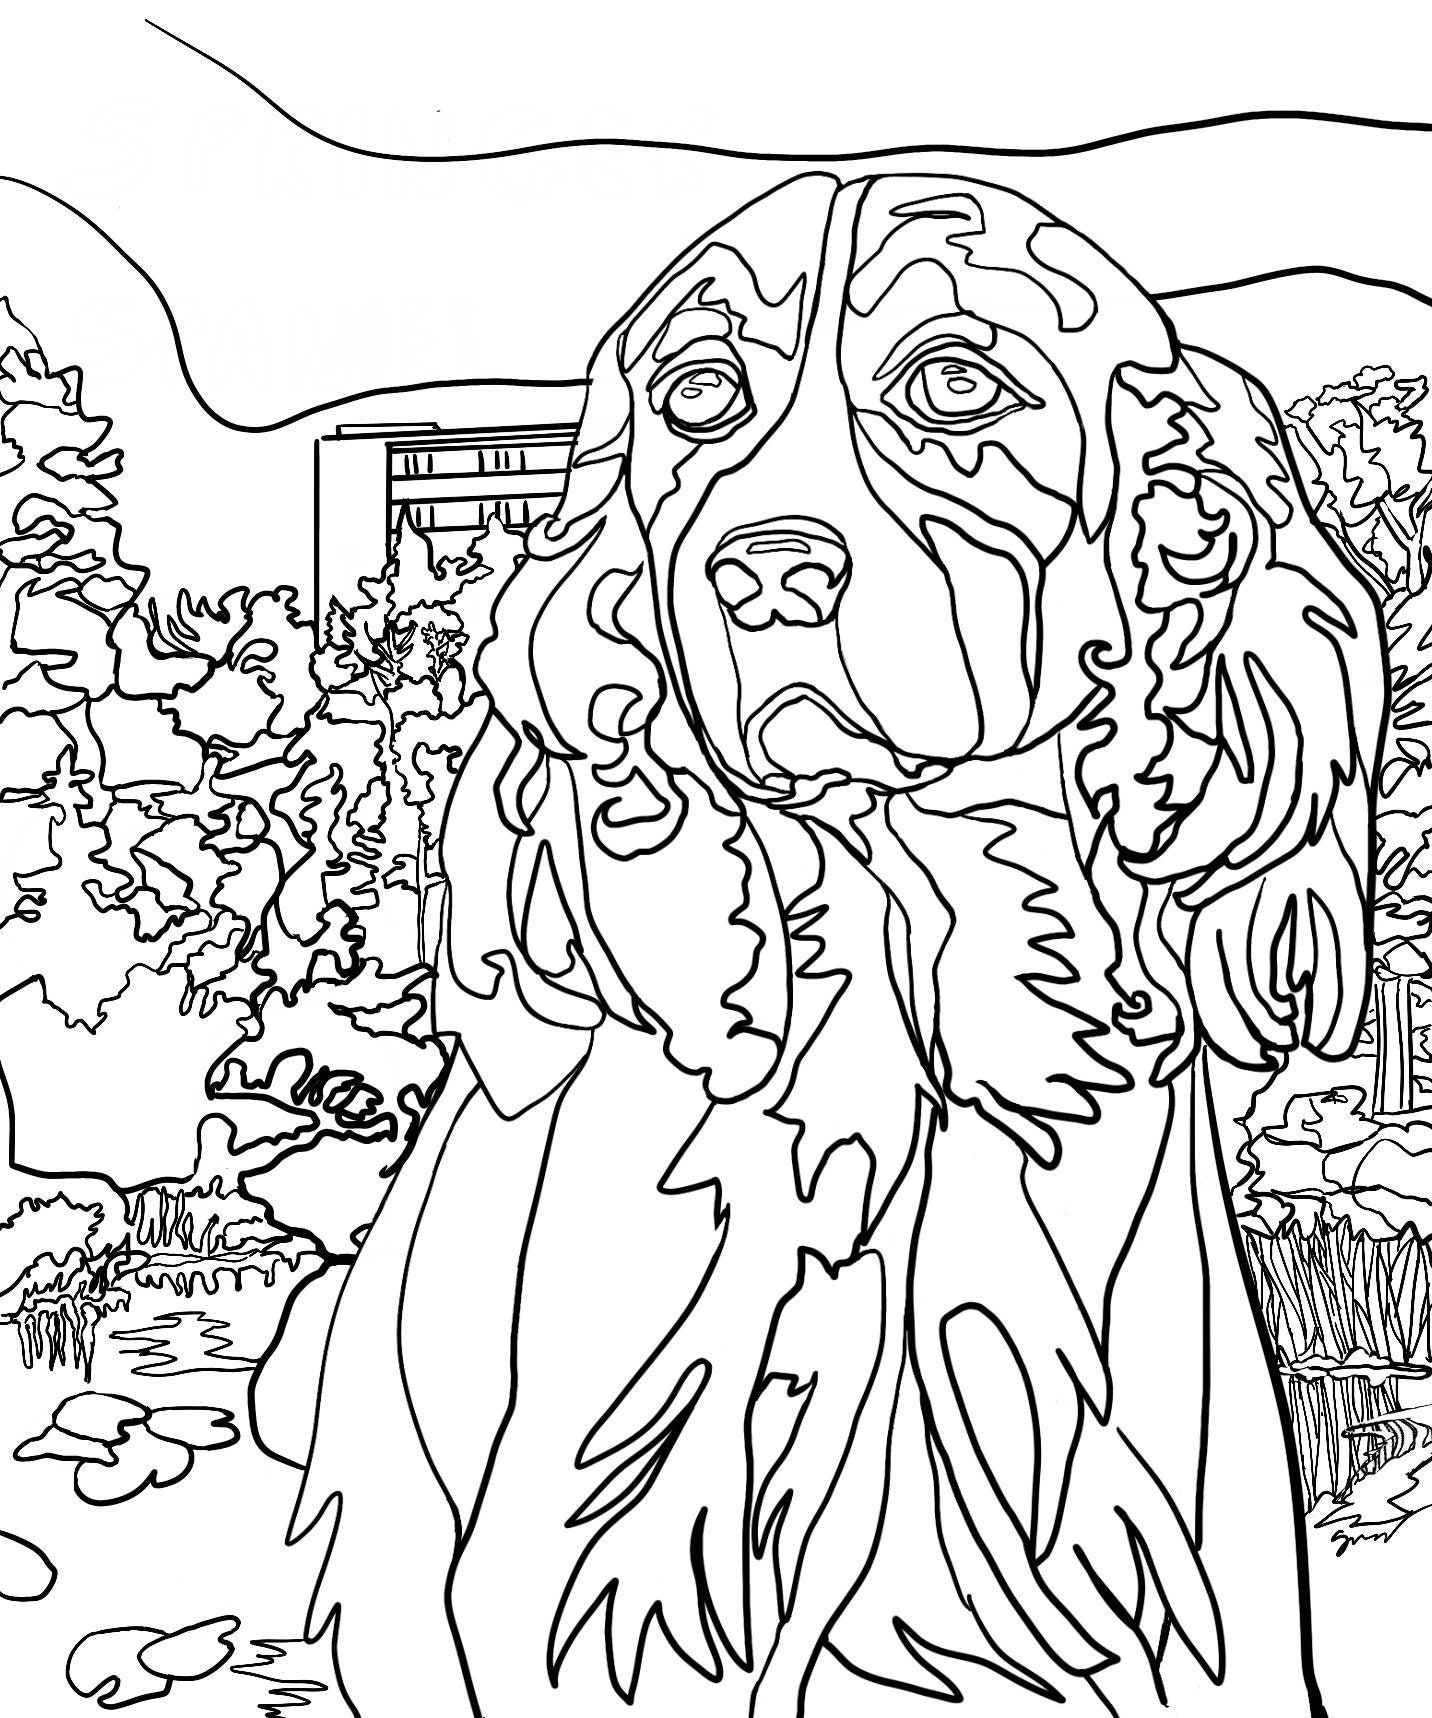 Printable Springer Spaniel Dog Coloring Page From Original Artwork ...